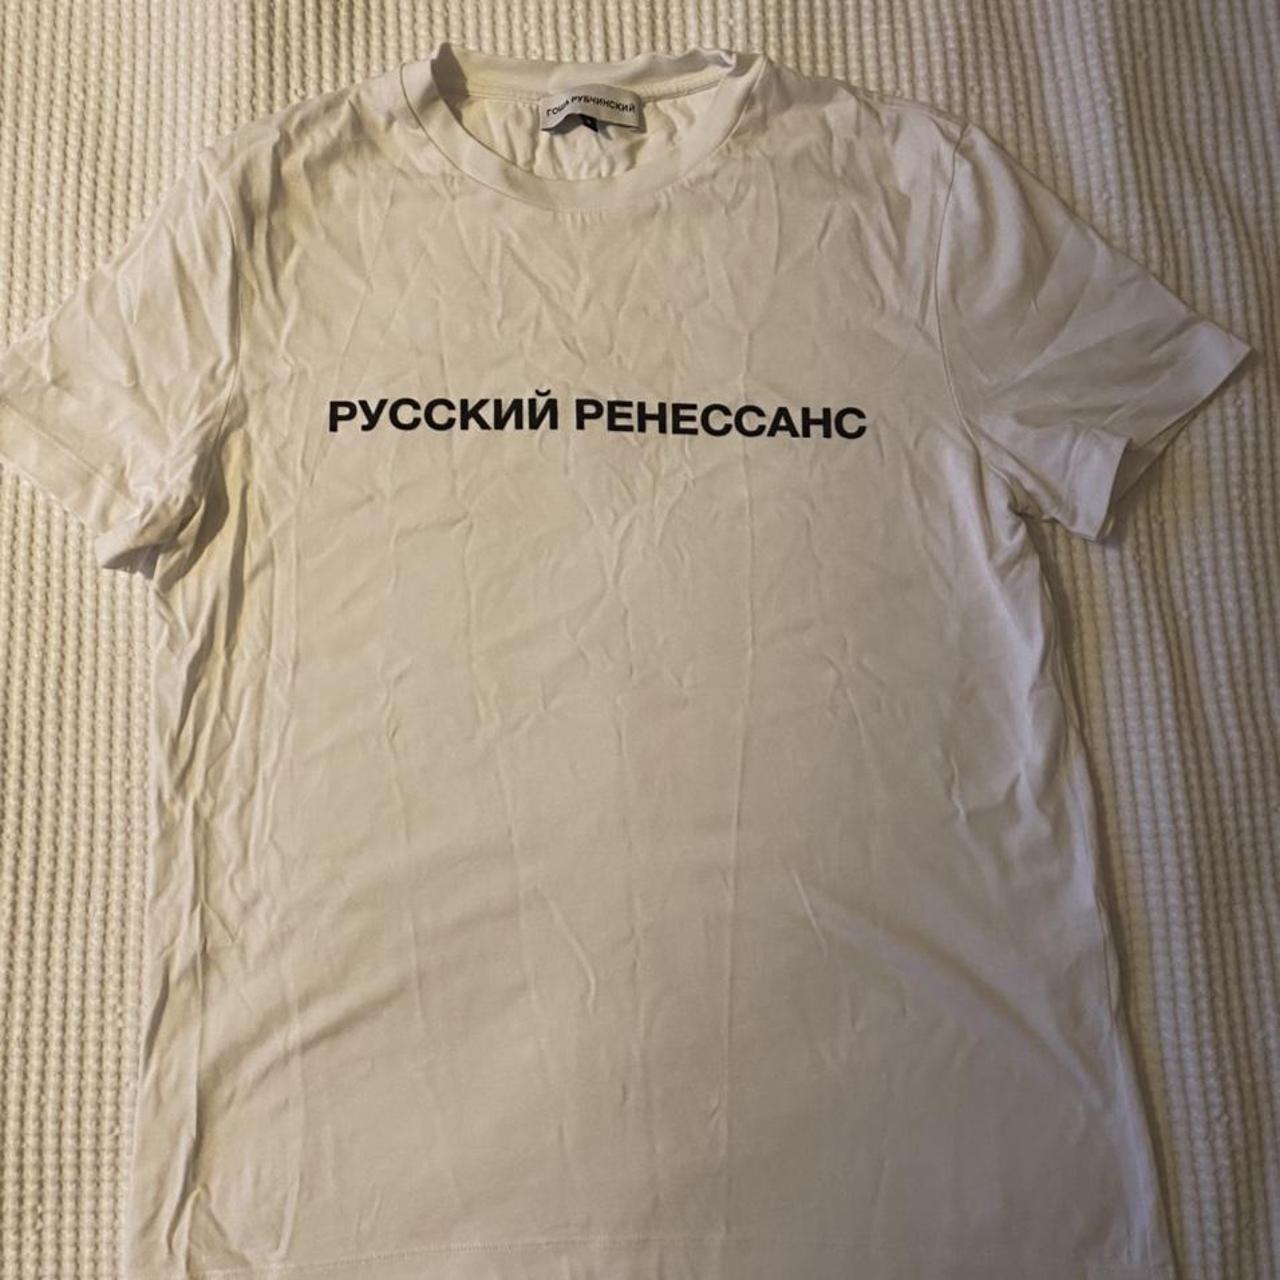 Gosha Rubchinskiy Men's White T-shirt